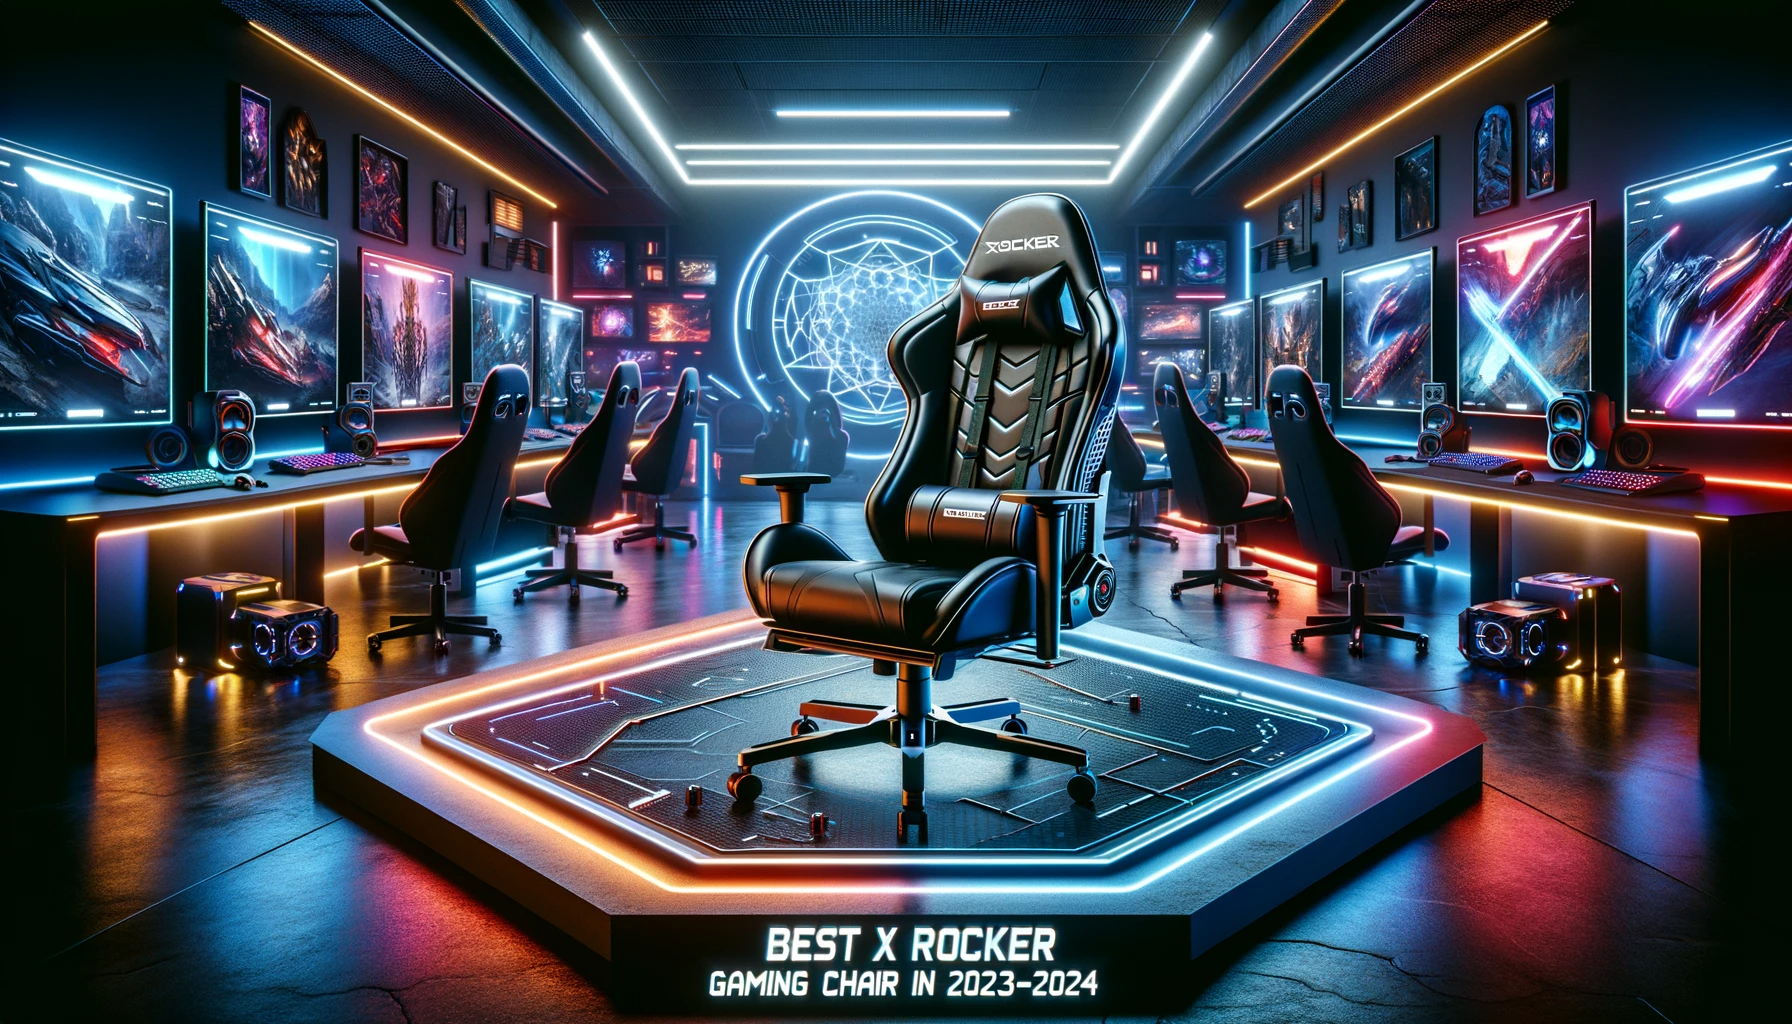 Best X Rocker Gaming chair In 2023-2024